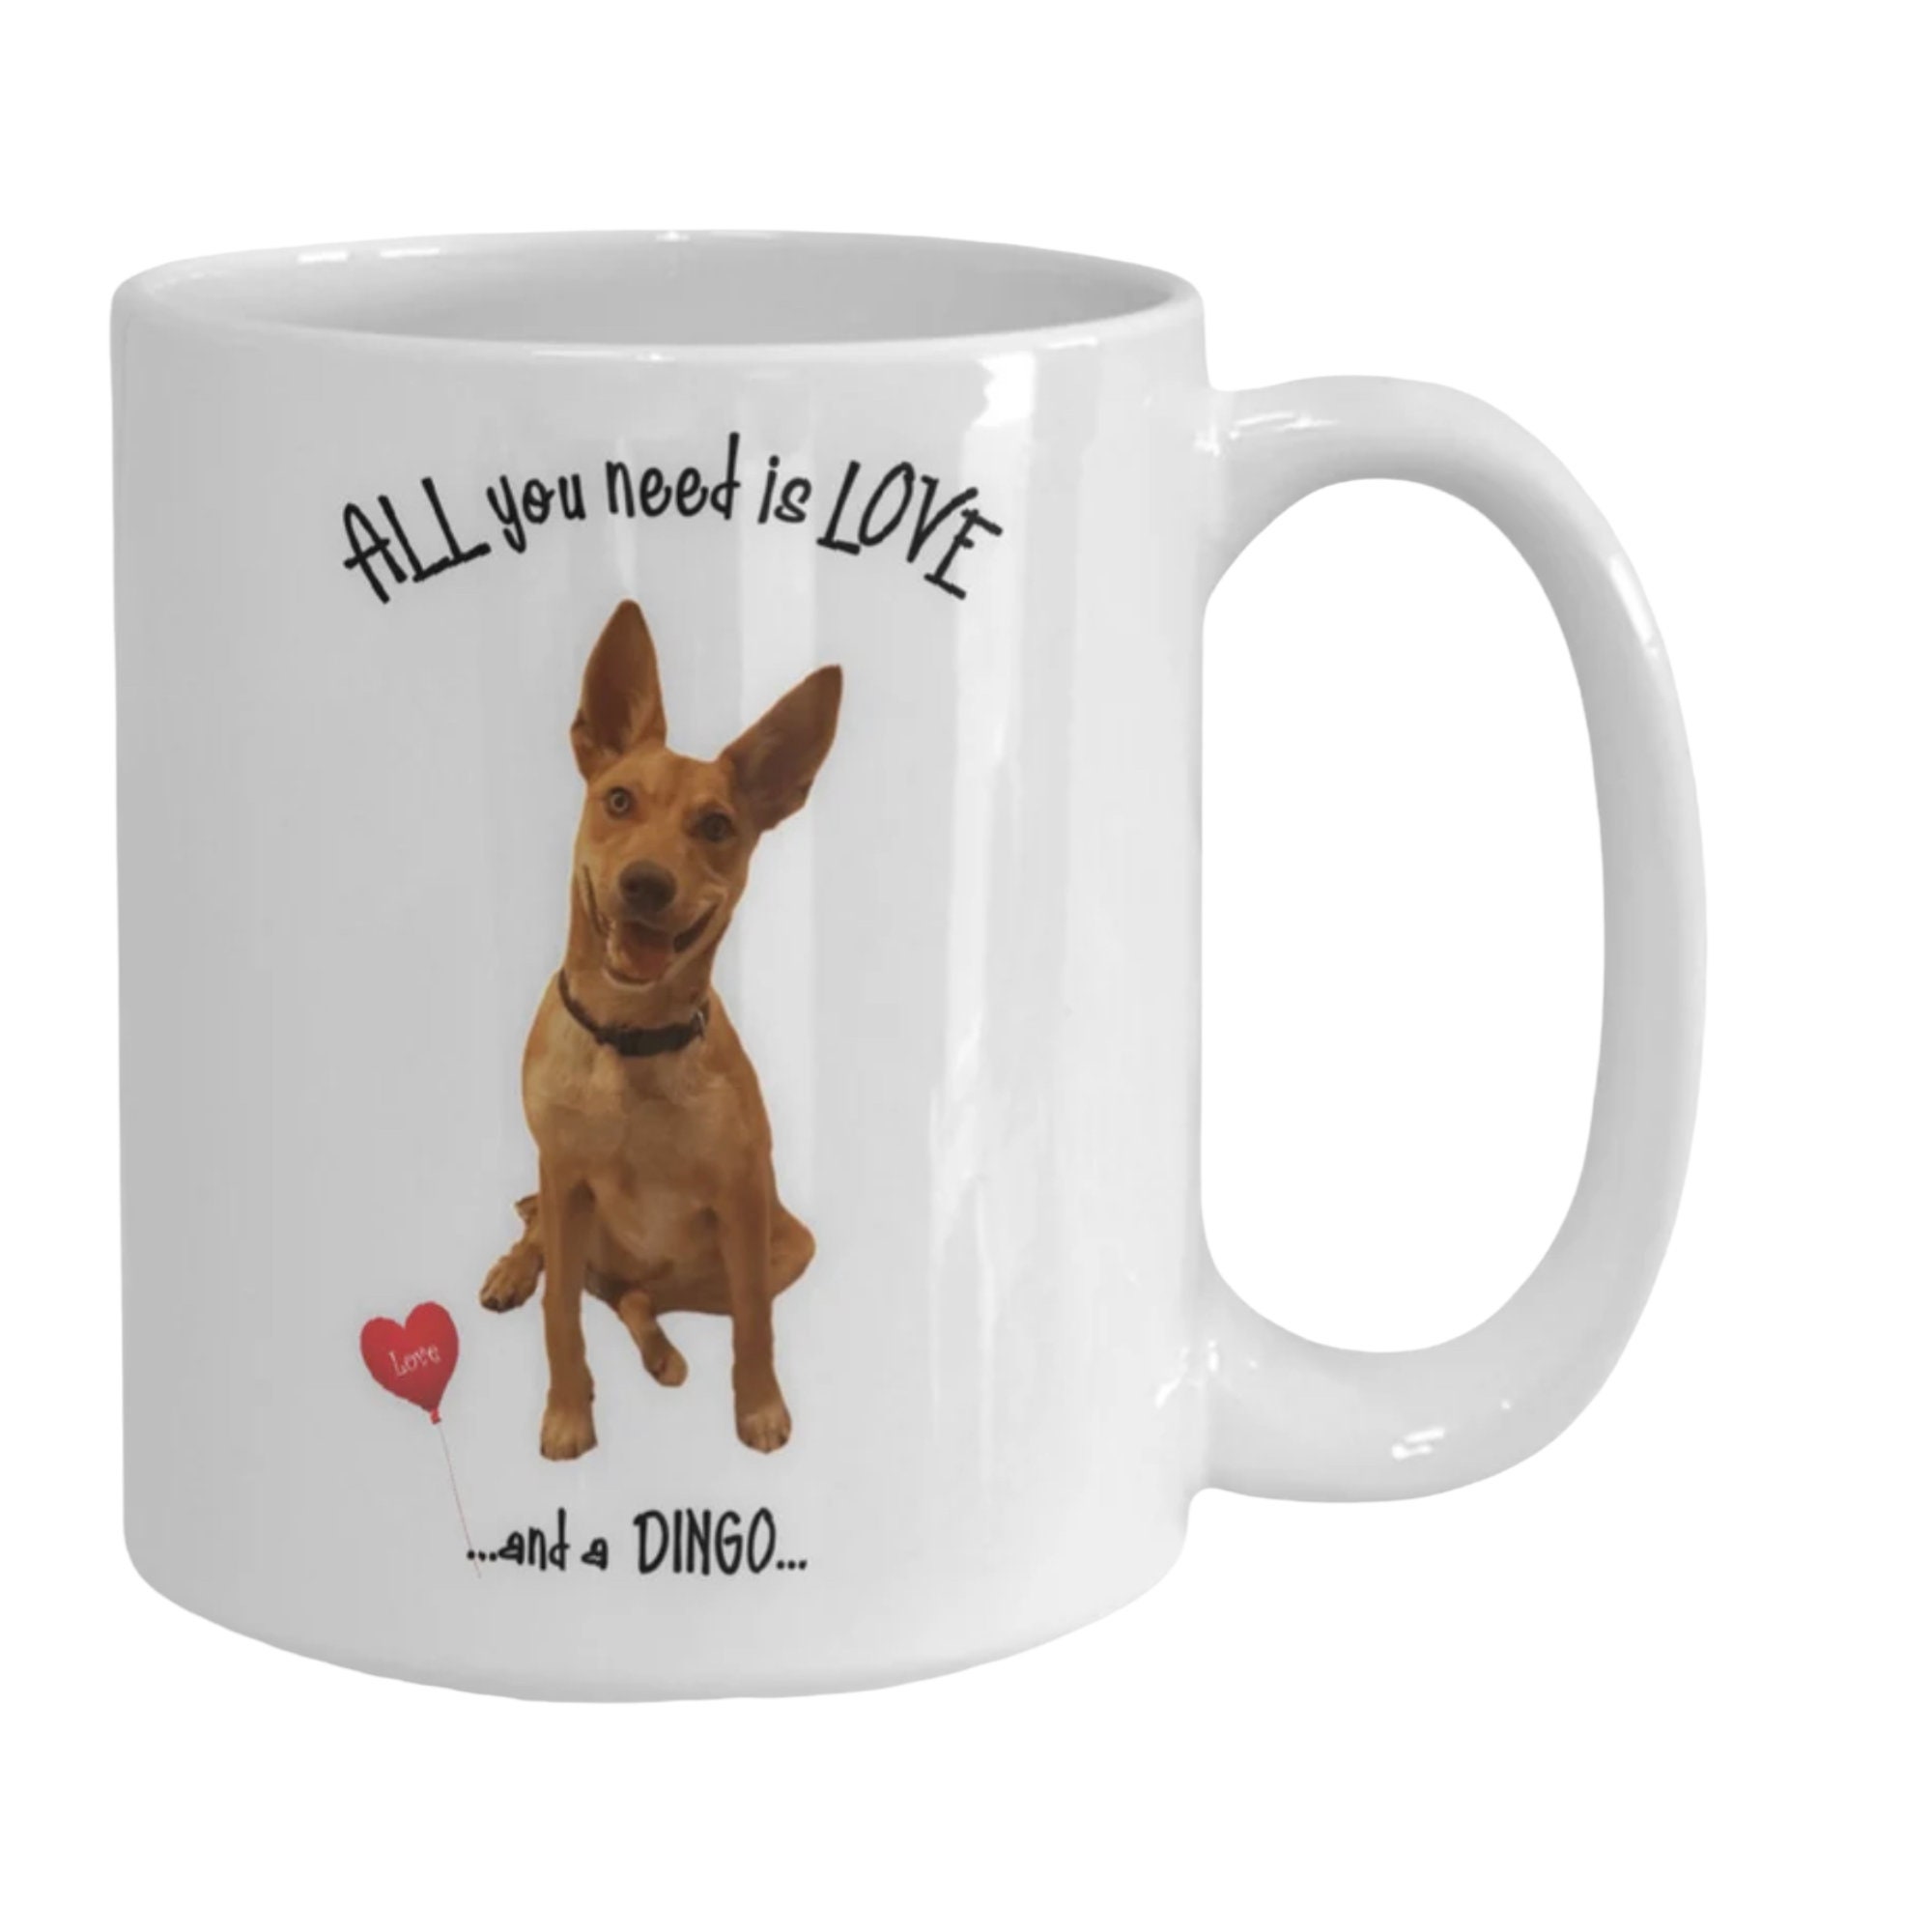 Dingo dog mug for sale  